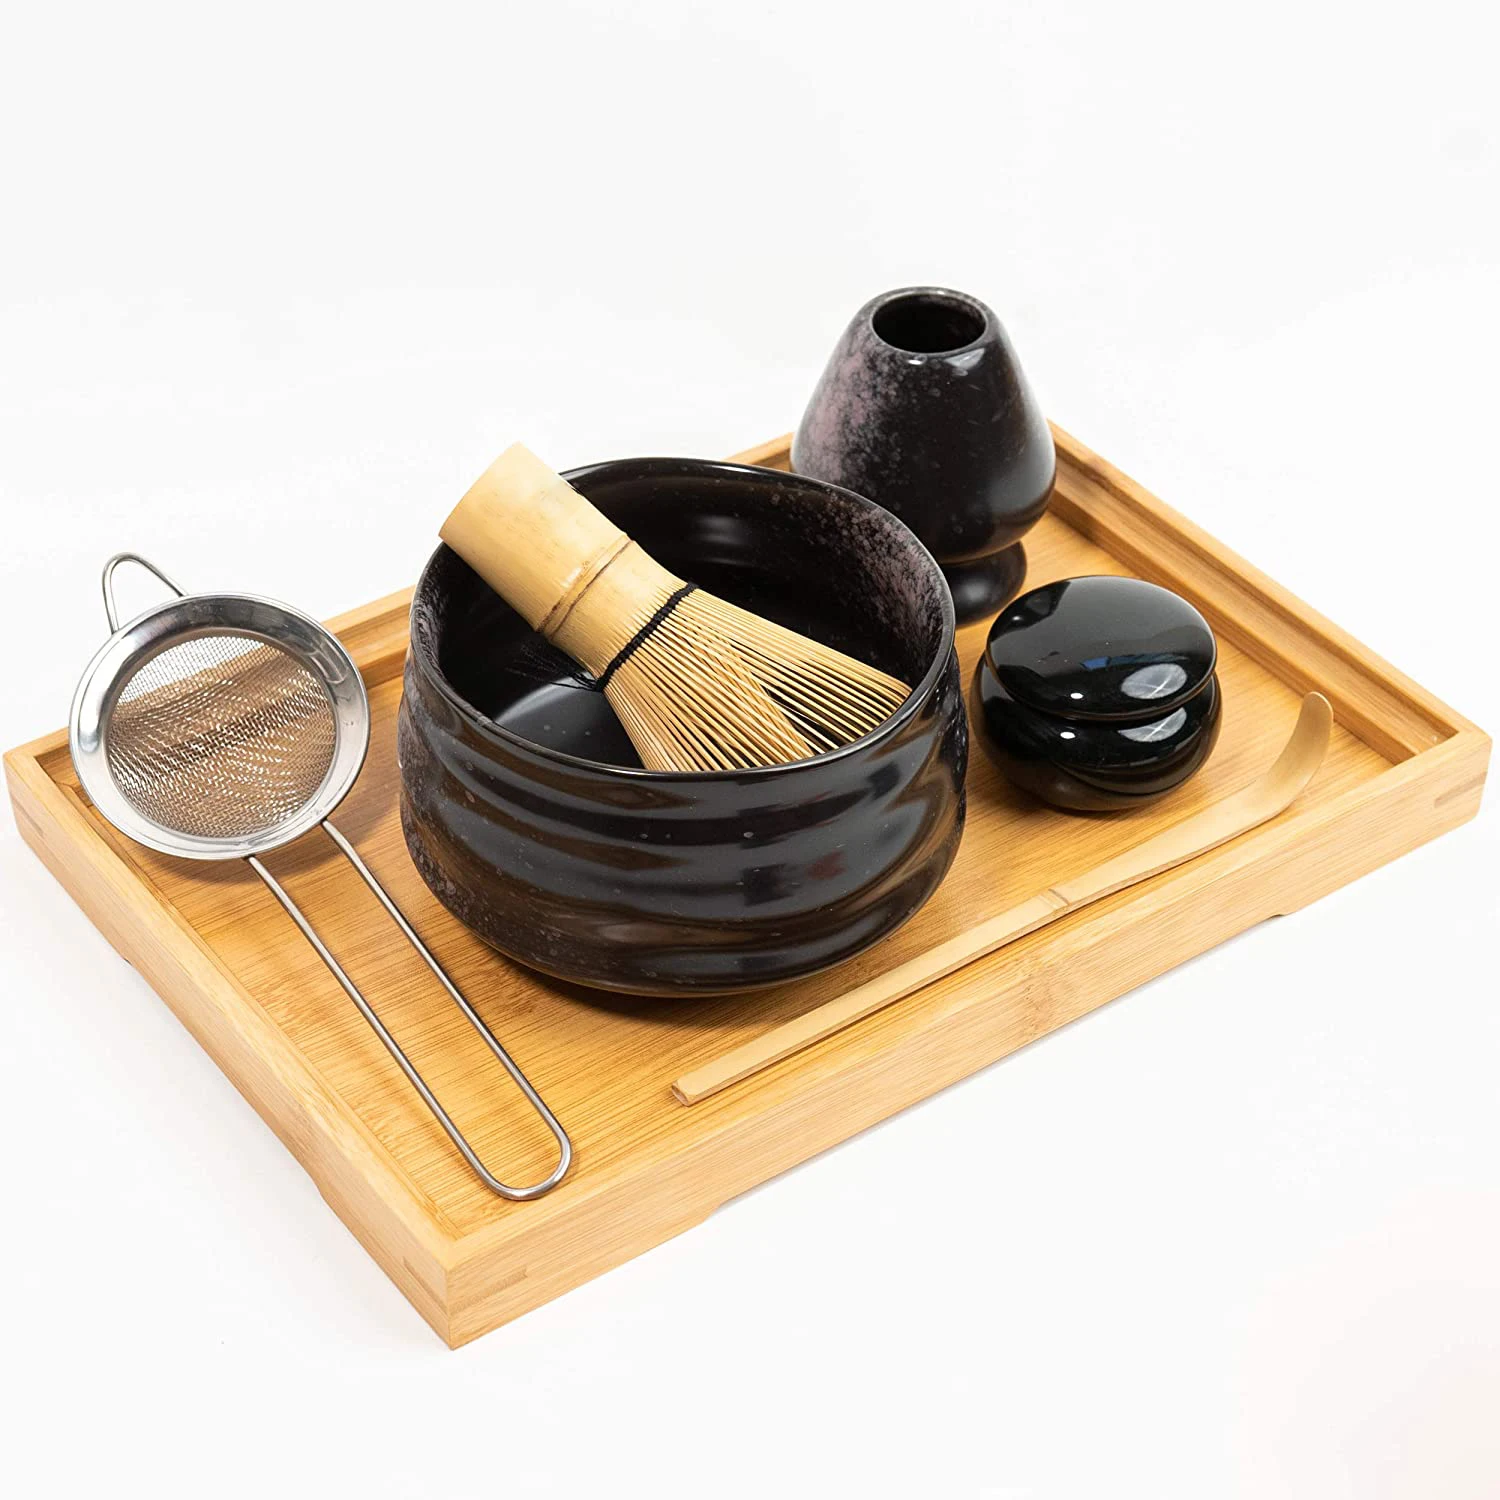 

Tiitee Wholesale Matcha Bowl Set Hand made Ceramic Glazed Black Chawan Japanese Tea Cup, Multiple